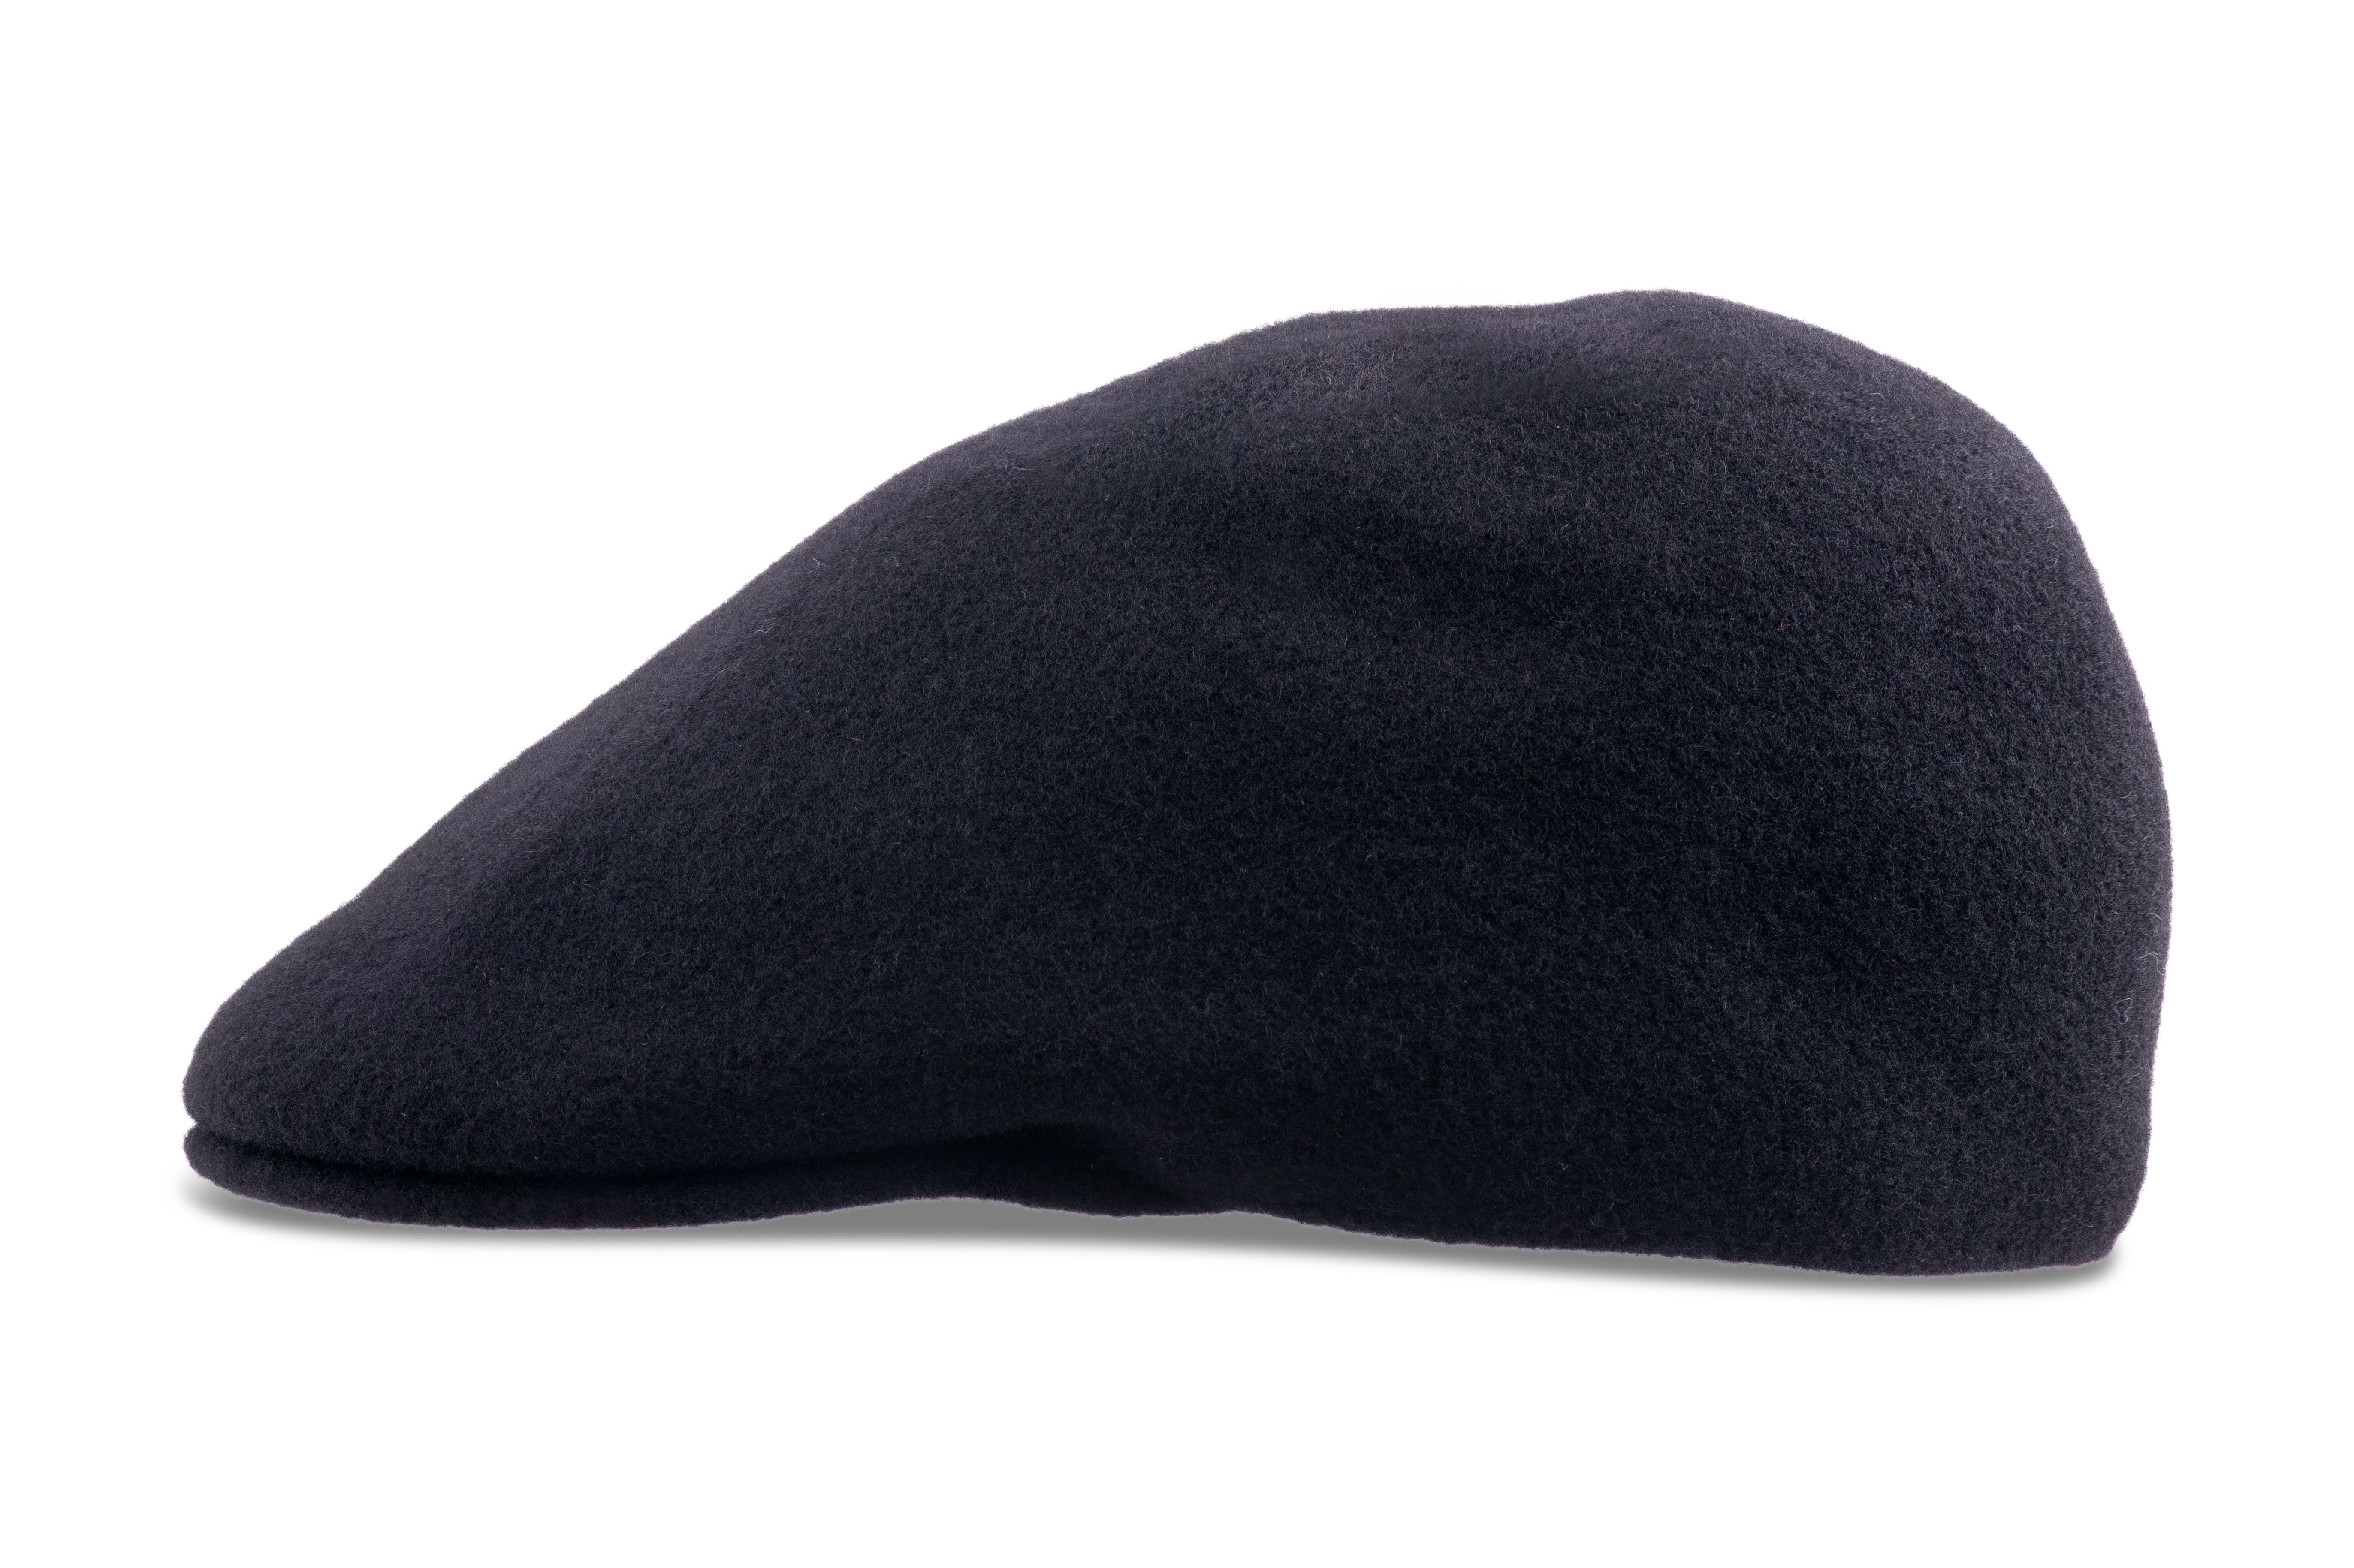 Kangol Seamless Wool 507 Felt Hat for Men and Women - Black - M